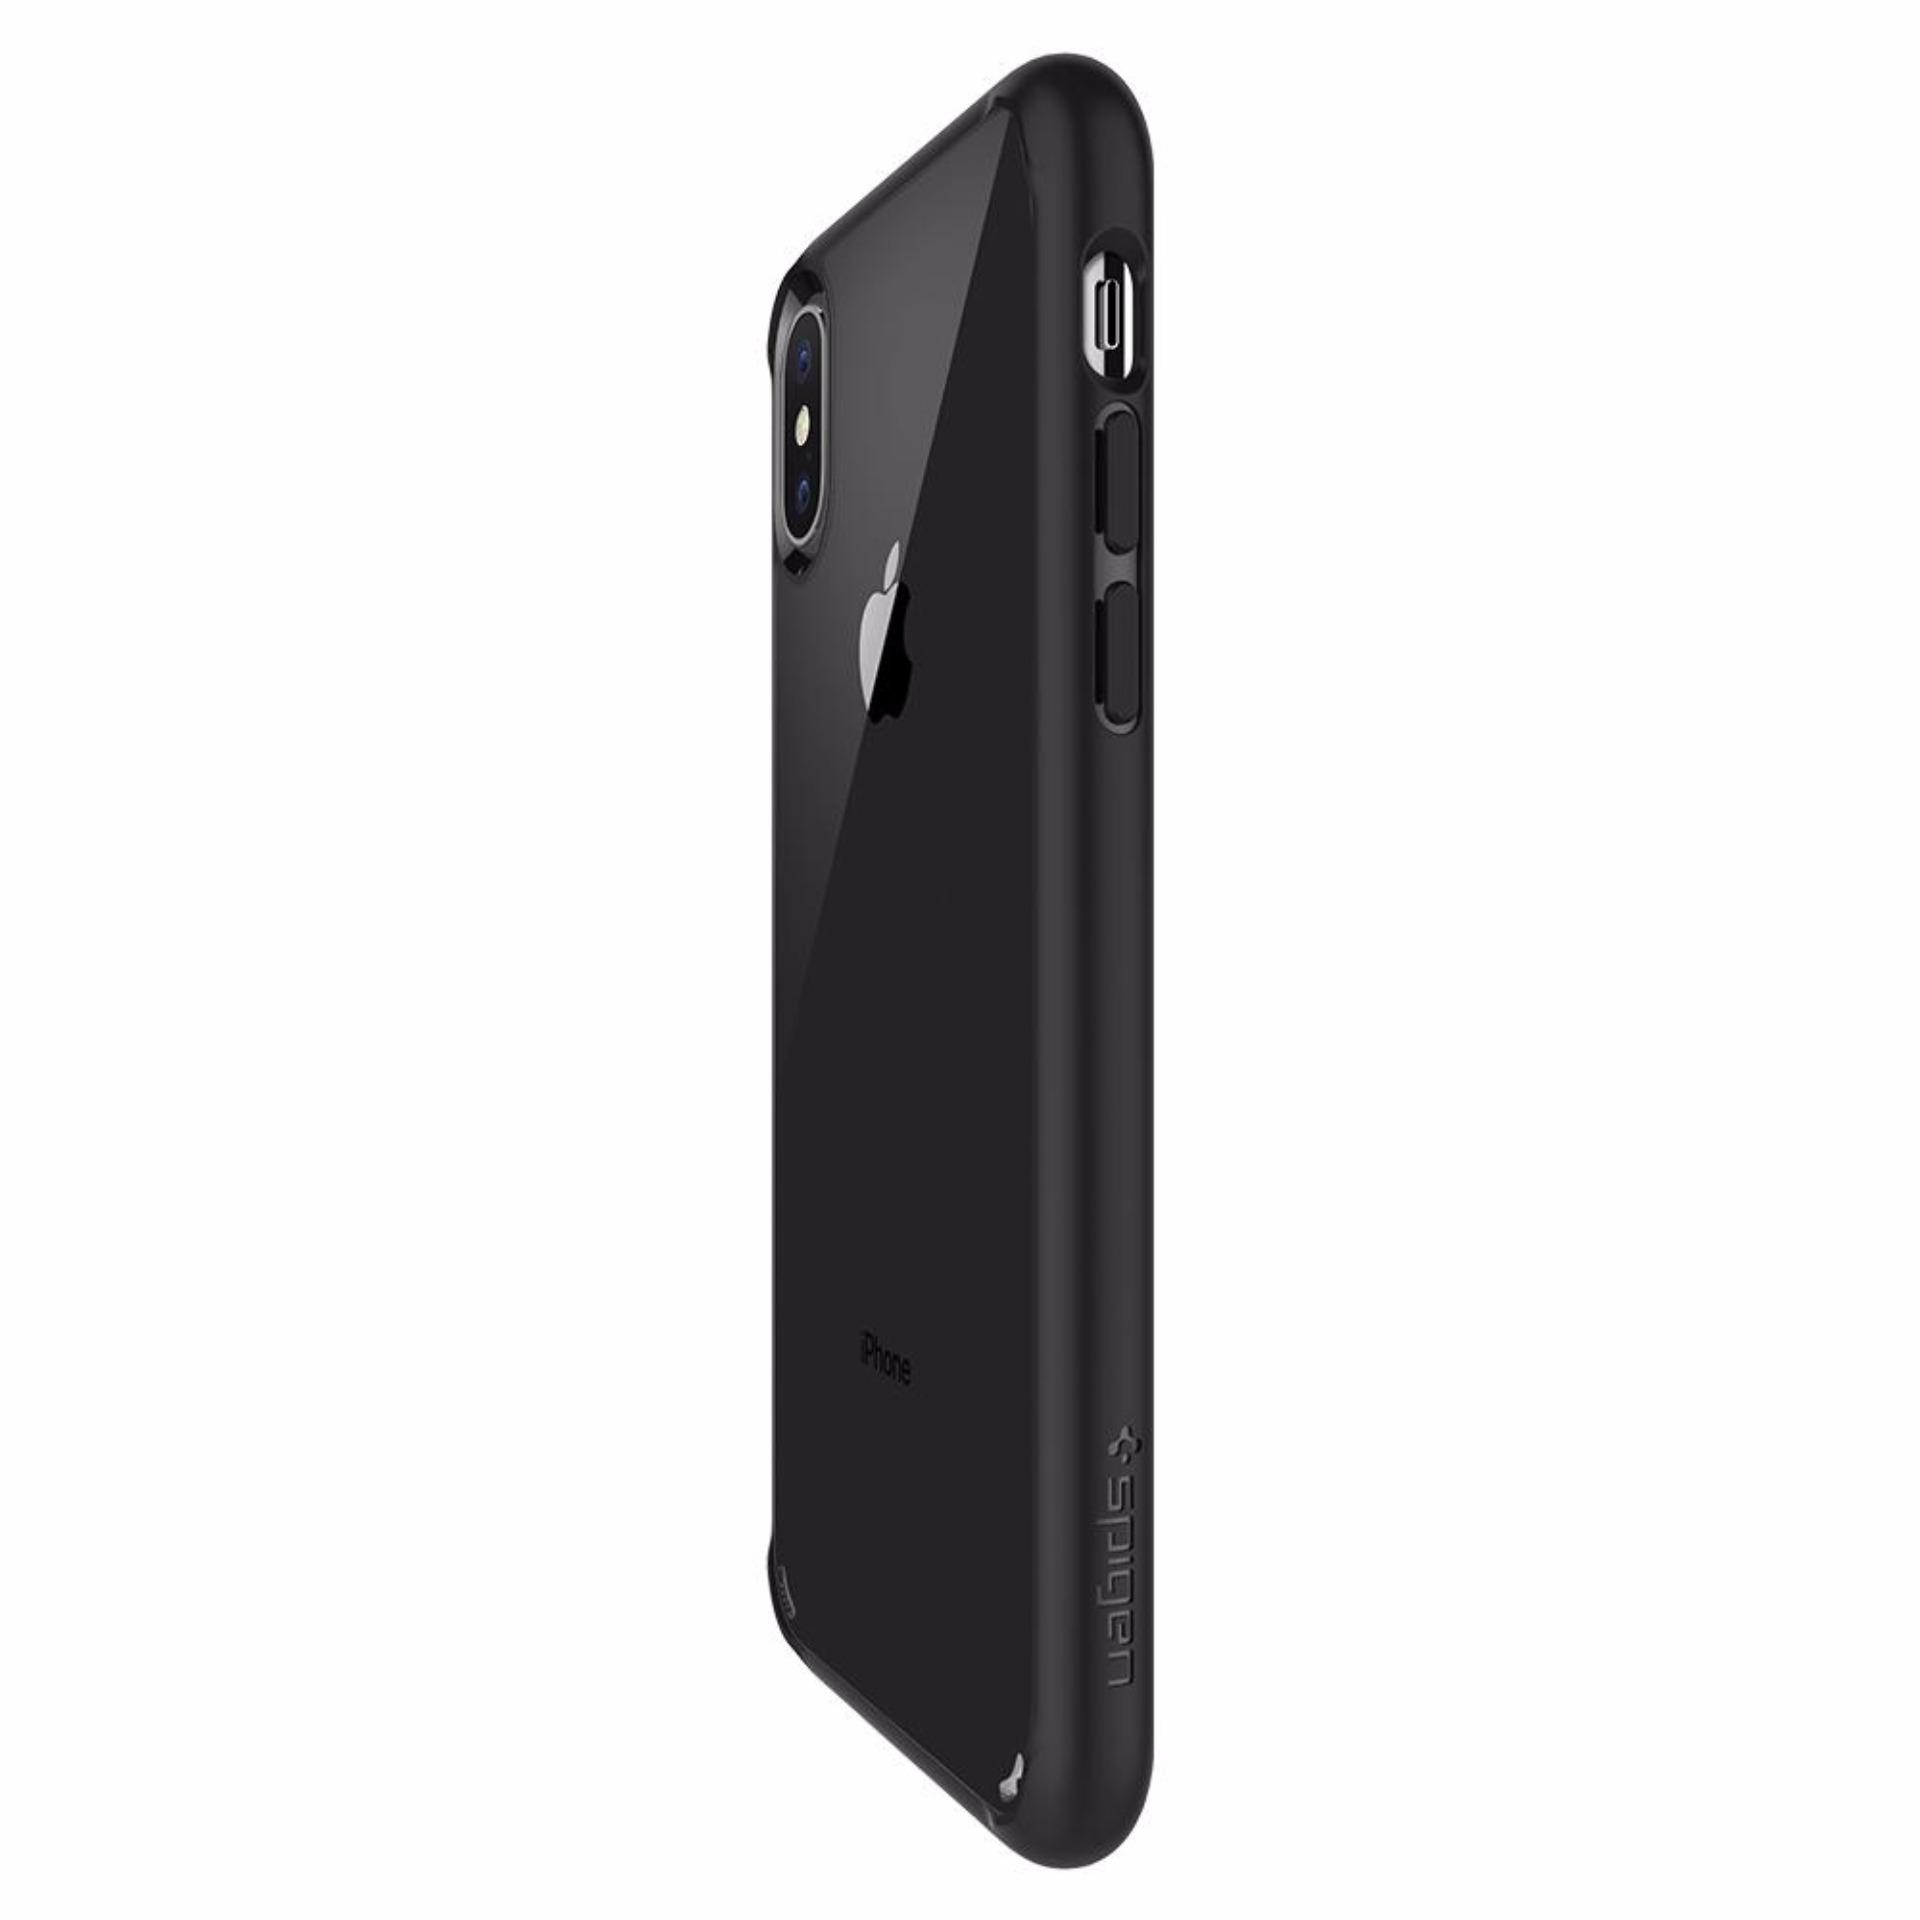 Spigen iPhone XS 5.8 / iPhone X Ultra Hybrid Case (Authentic)